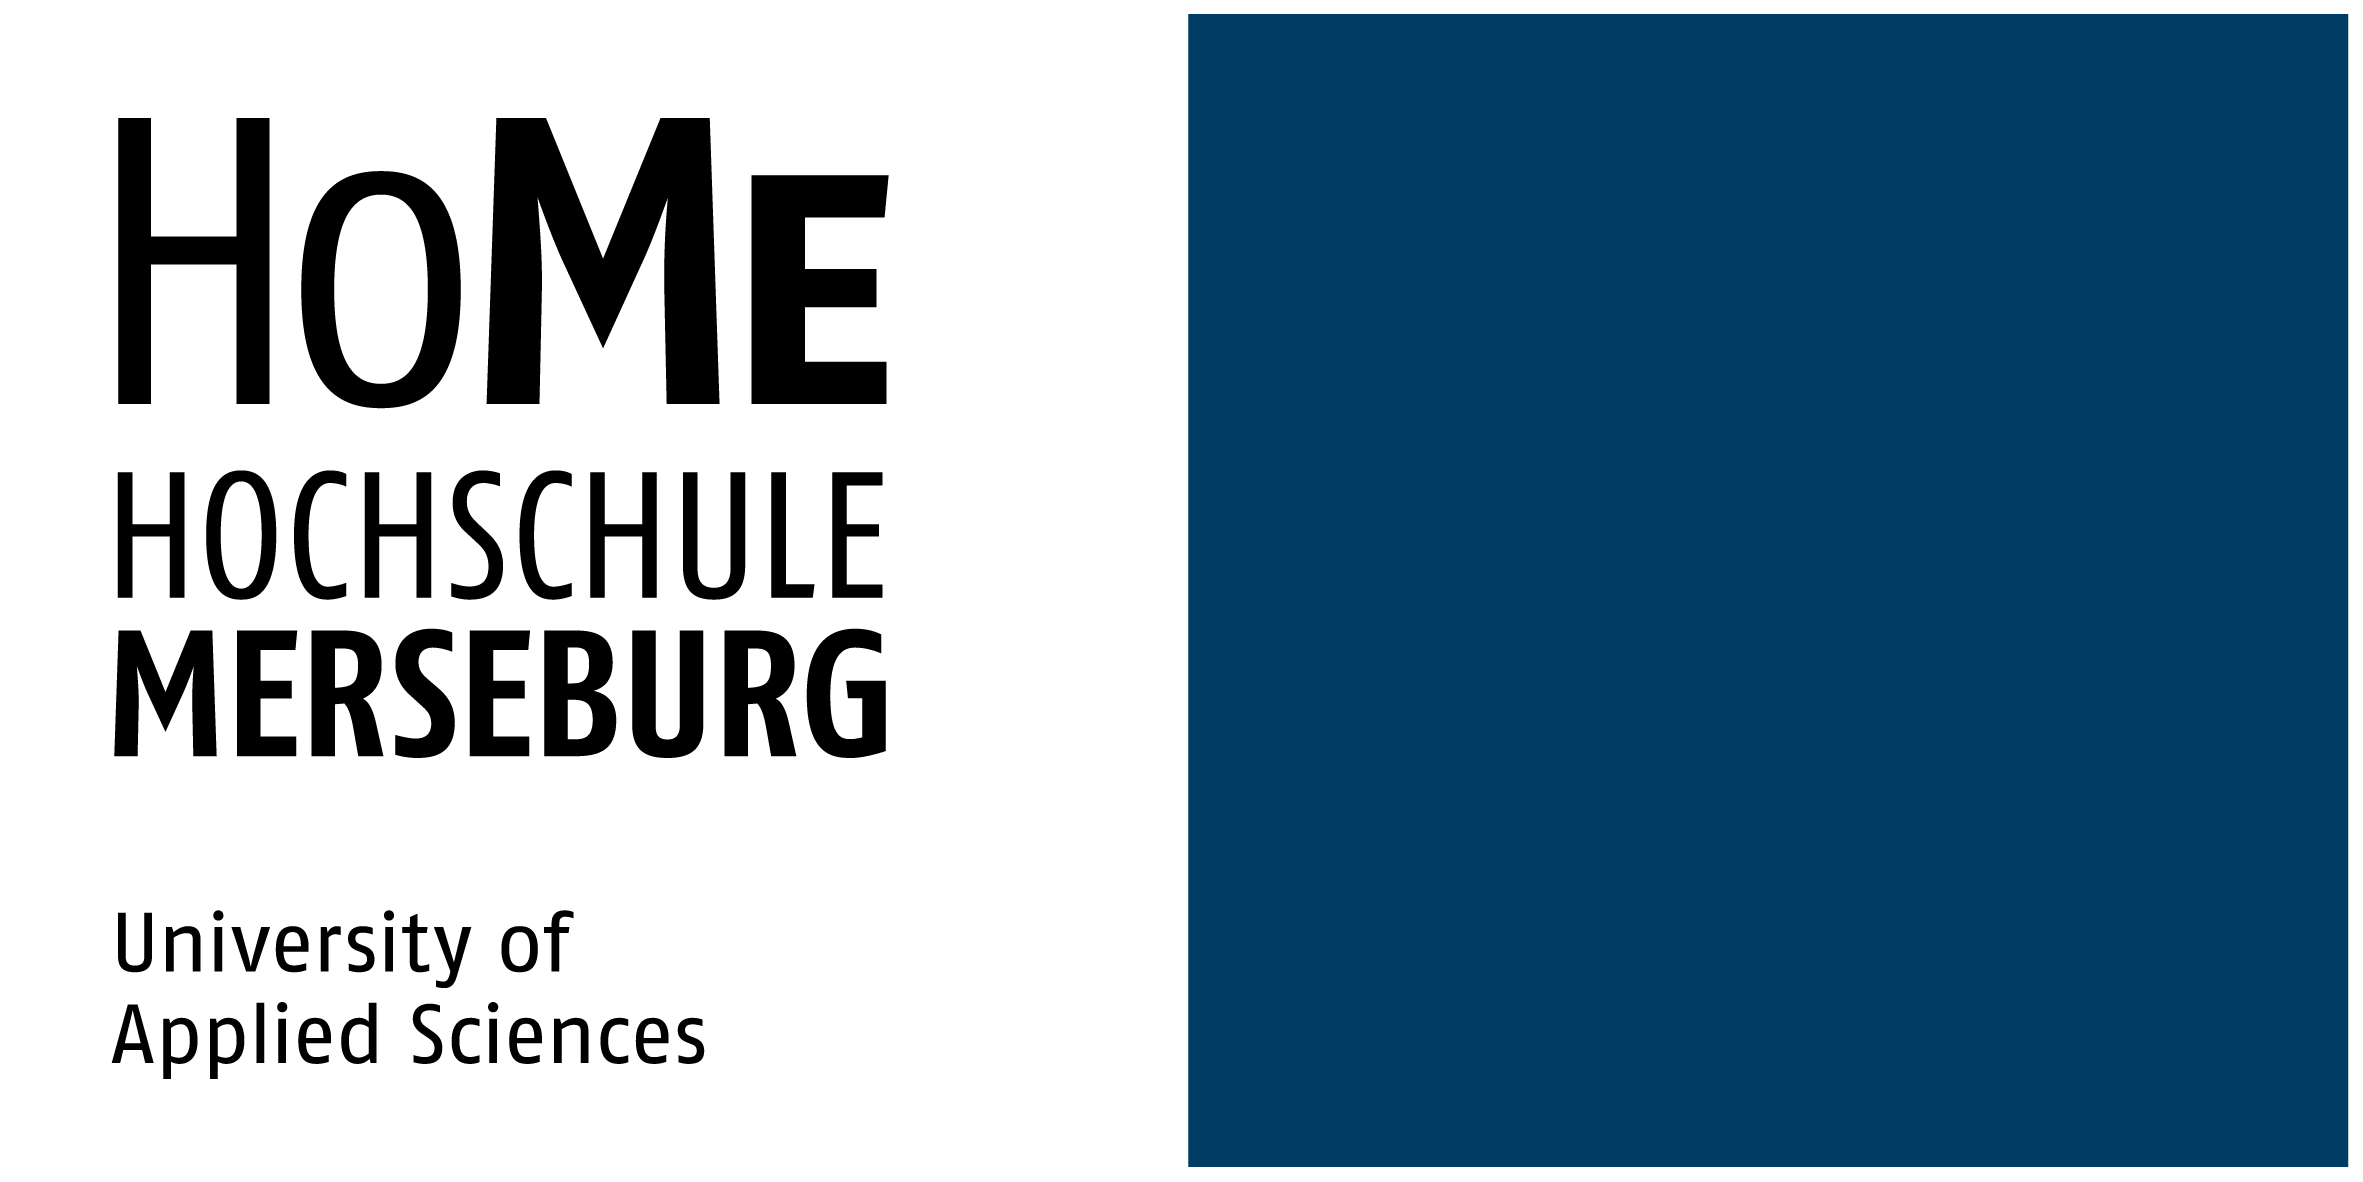 Hochschule merseburg logo